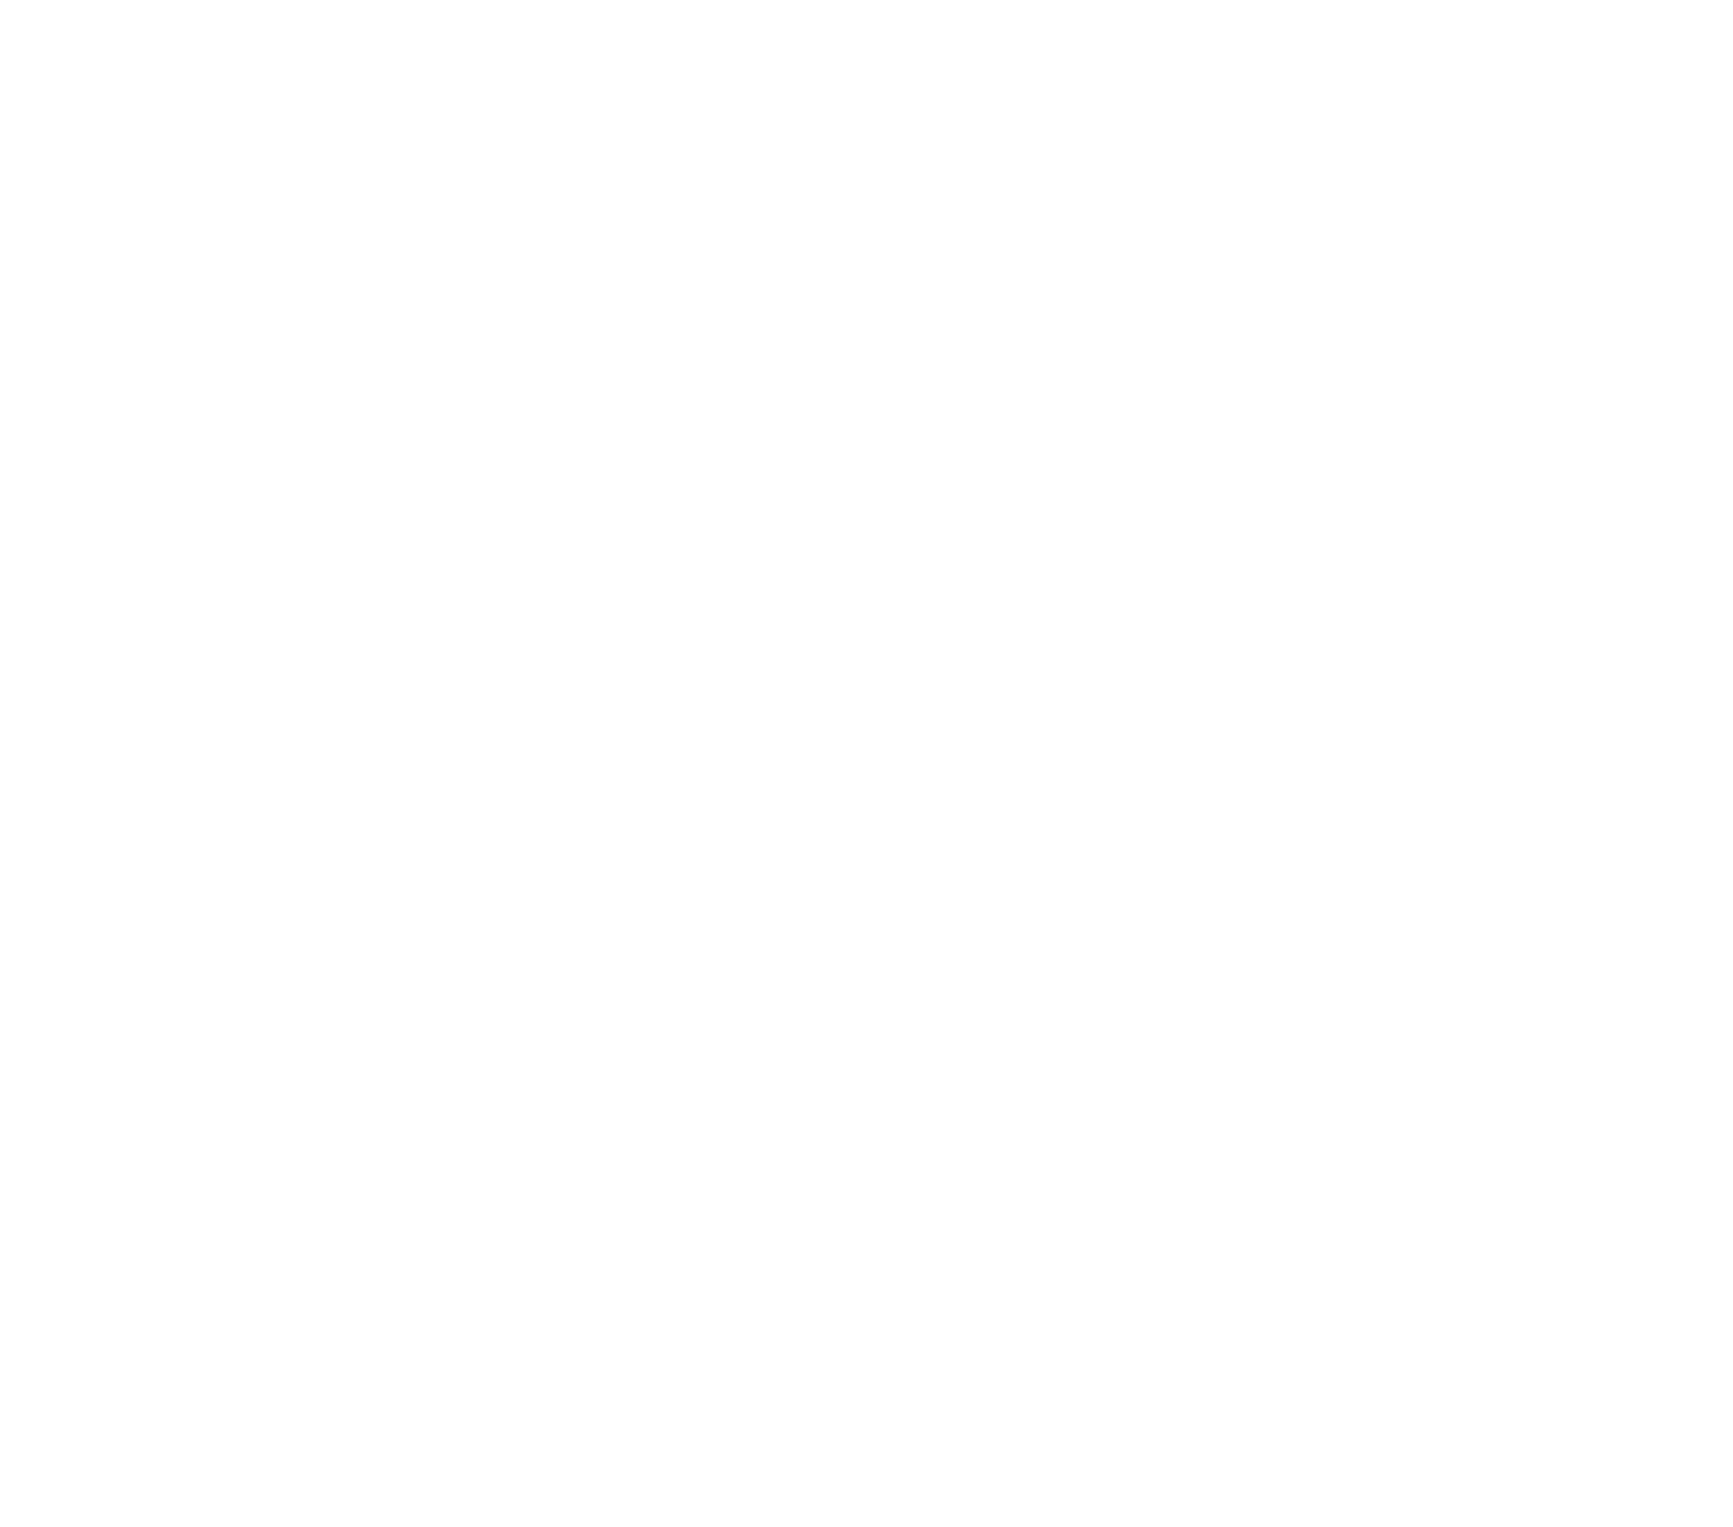 AHF Americas Health Foundation 501 (c)(3) non-profit foundation